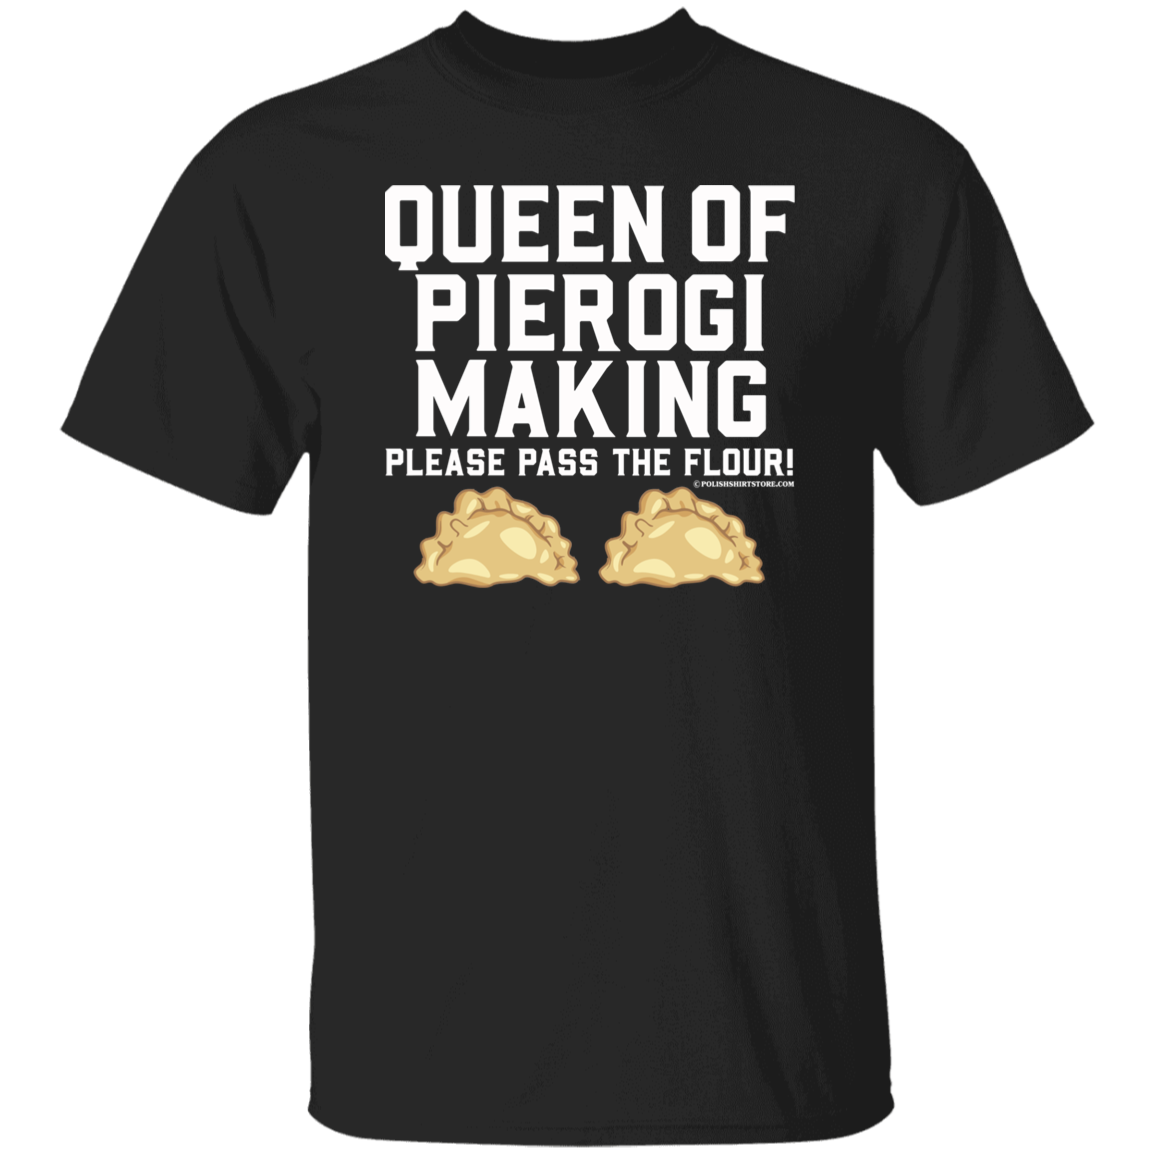 Queen Of Pierogi Making - Please Pass The Flour Apparel CustomCat G500 5.3 oz. T-Shirt Black S